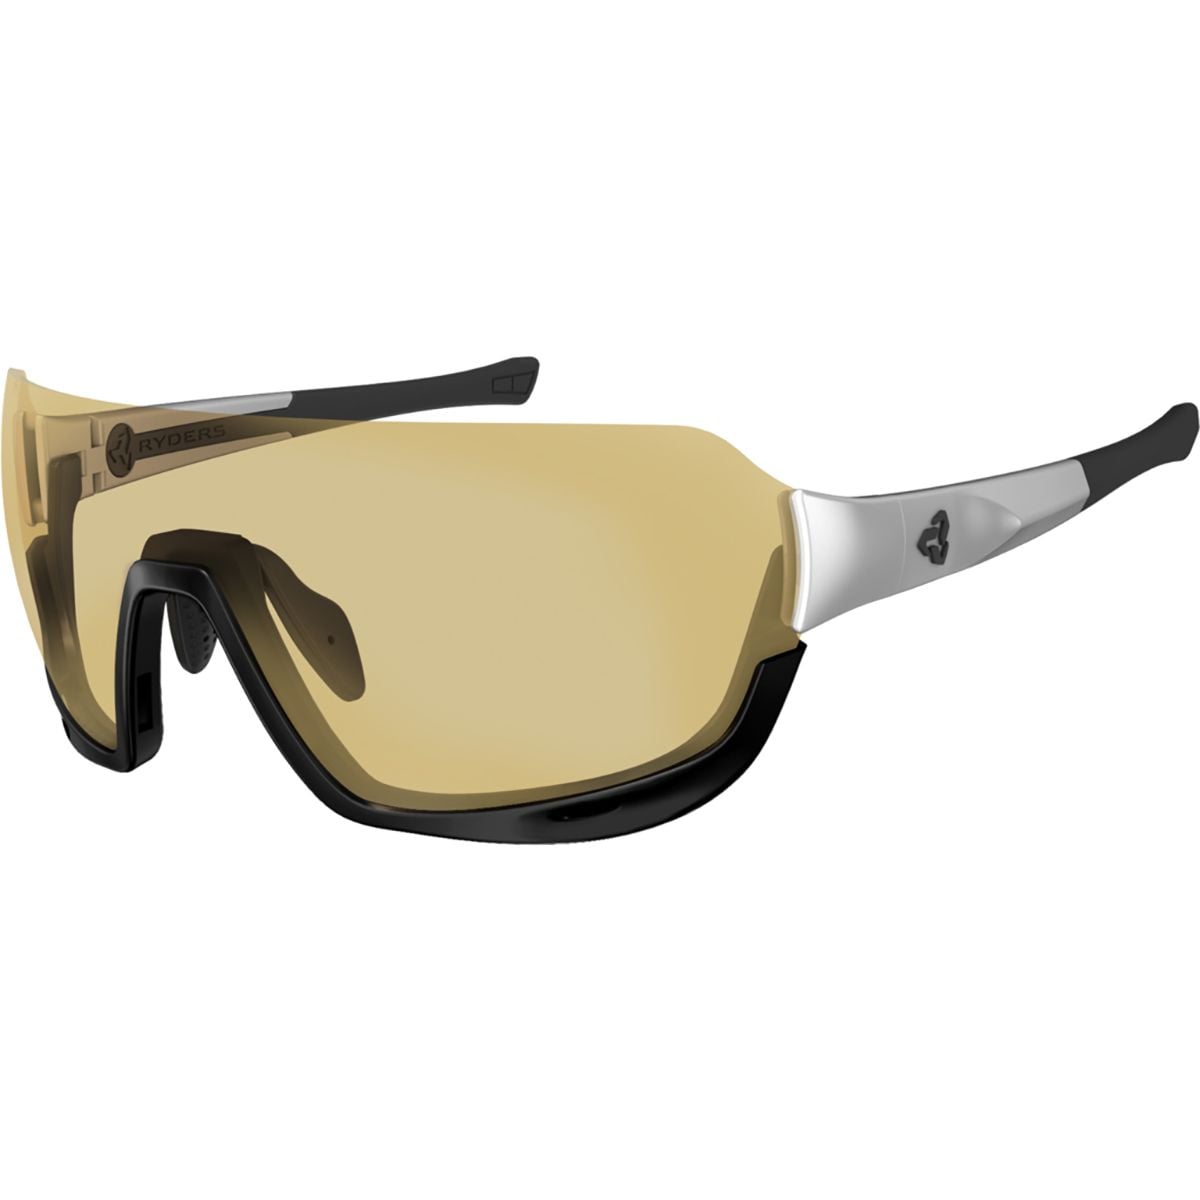 Ryders Eyewear Roam Photochromic Sunglasses Men's